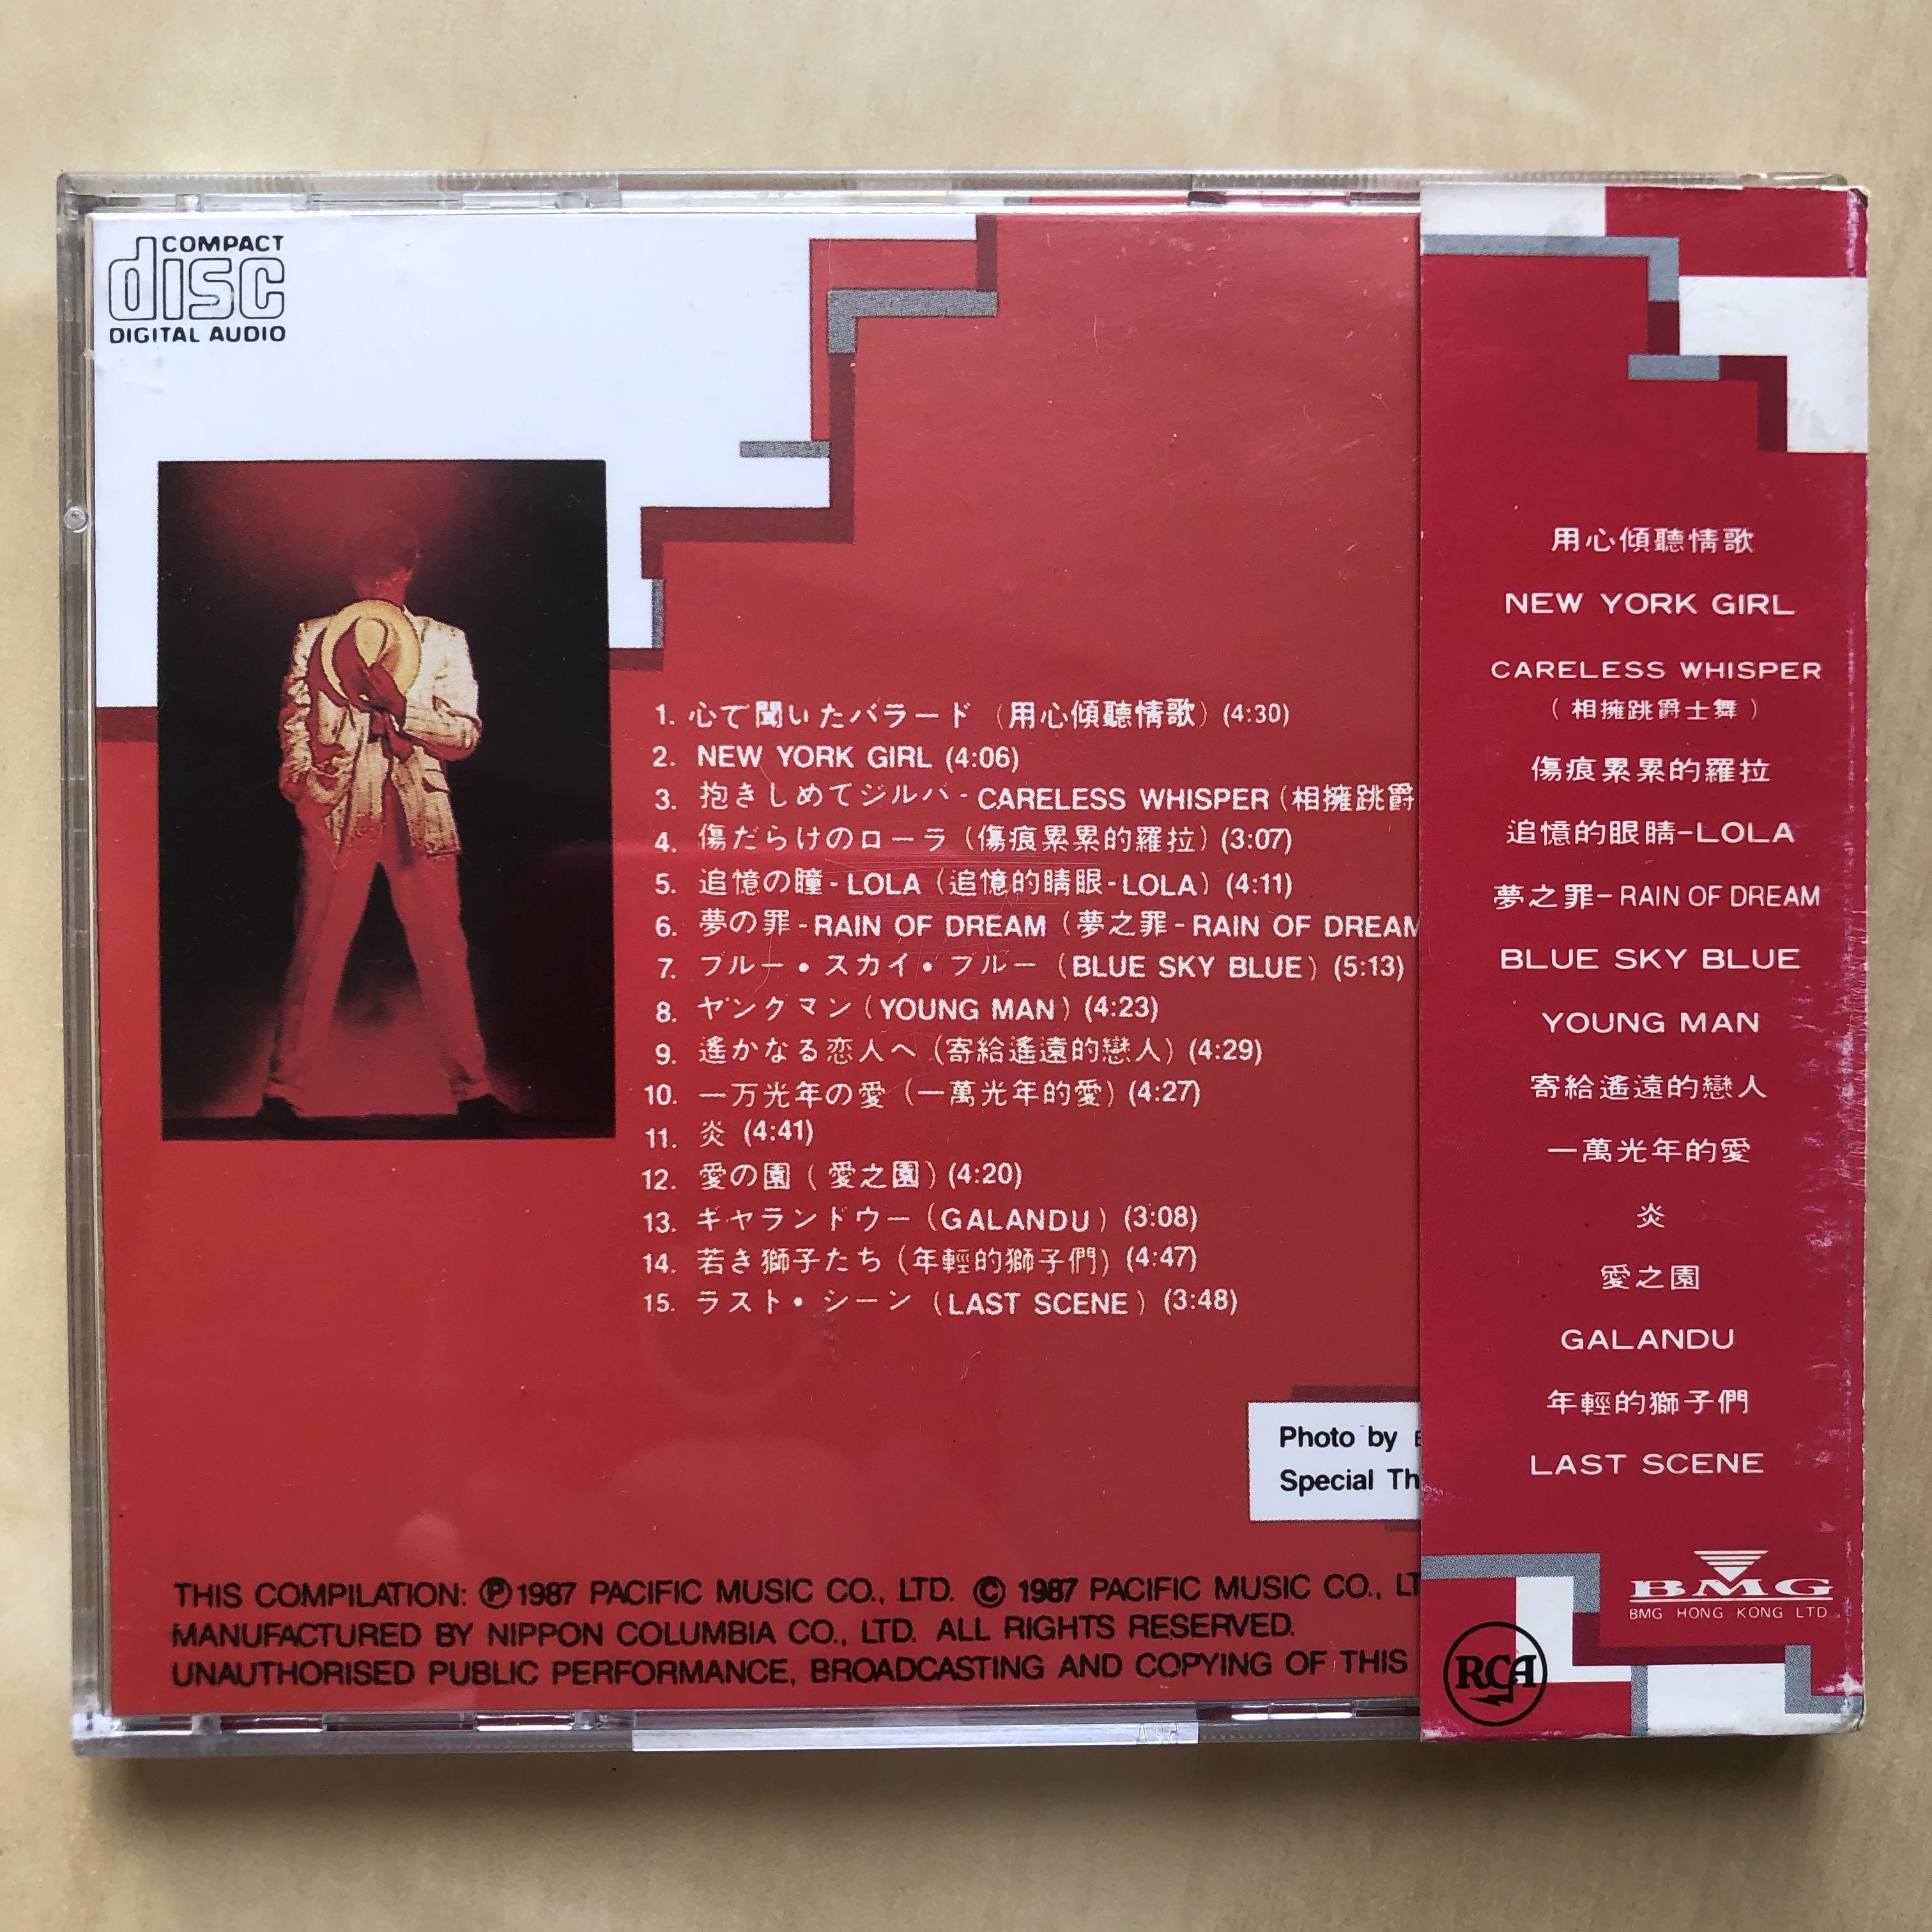 CD丨西城秀樹金裝精選金碟日本製, 興趣及遊戲, 音樂、樂器& 配件, 音樂 